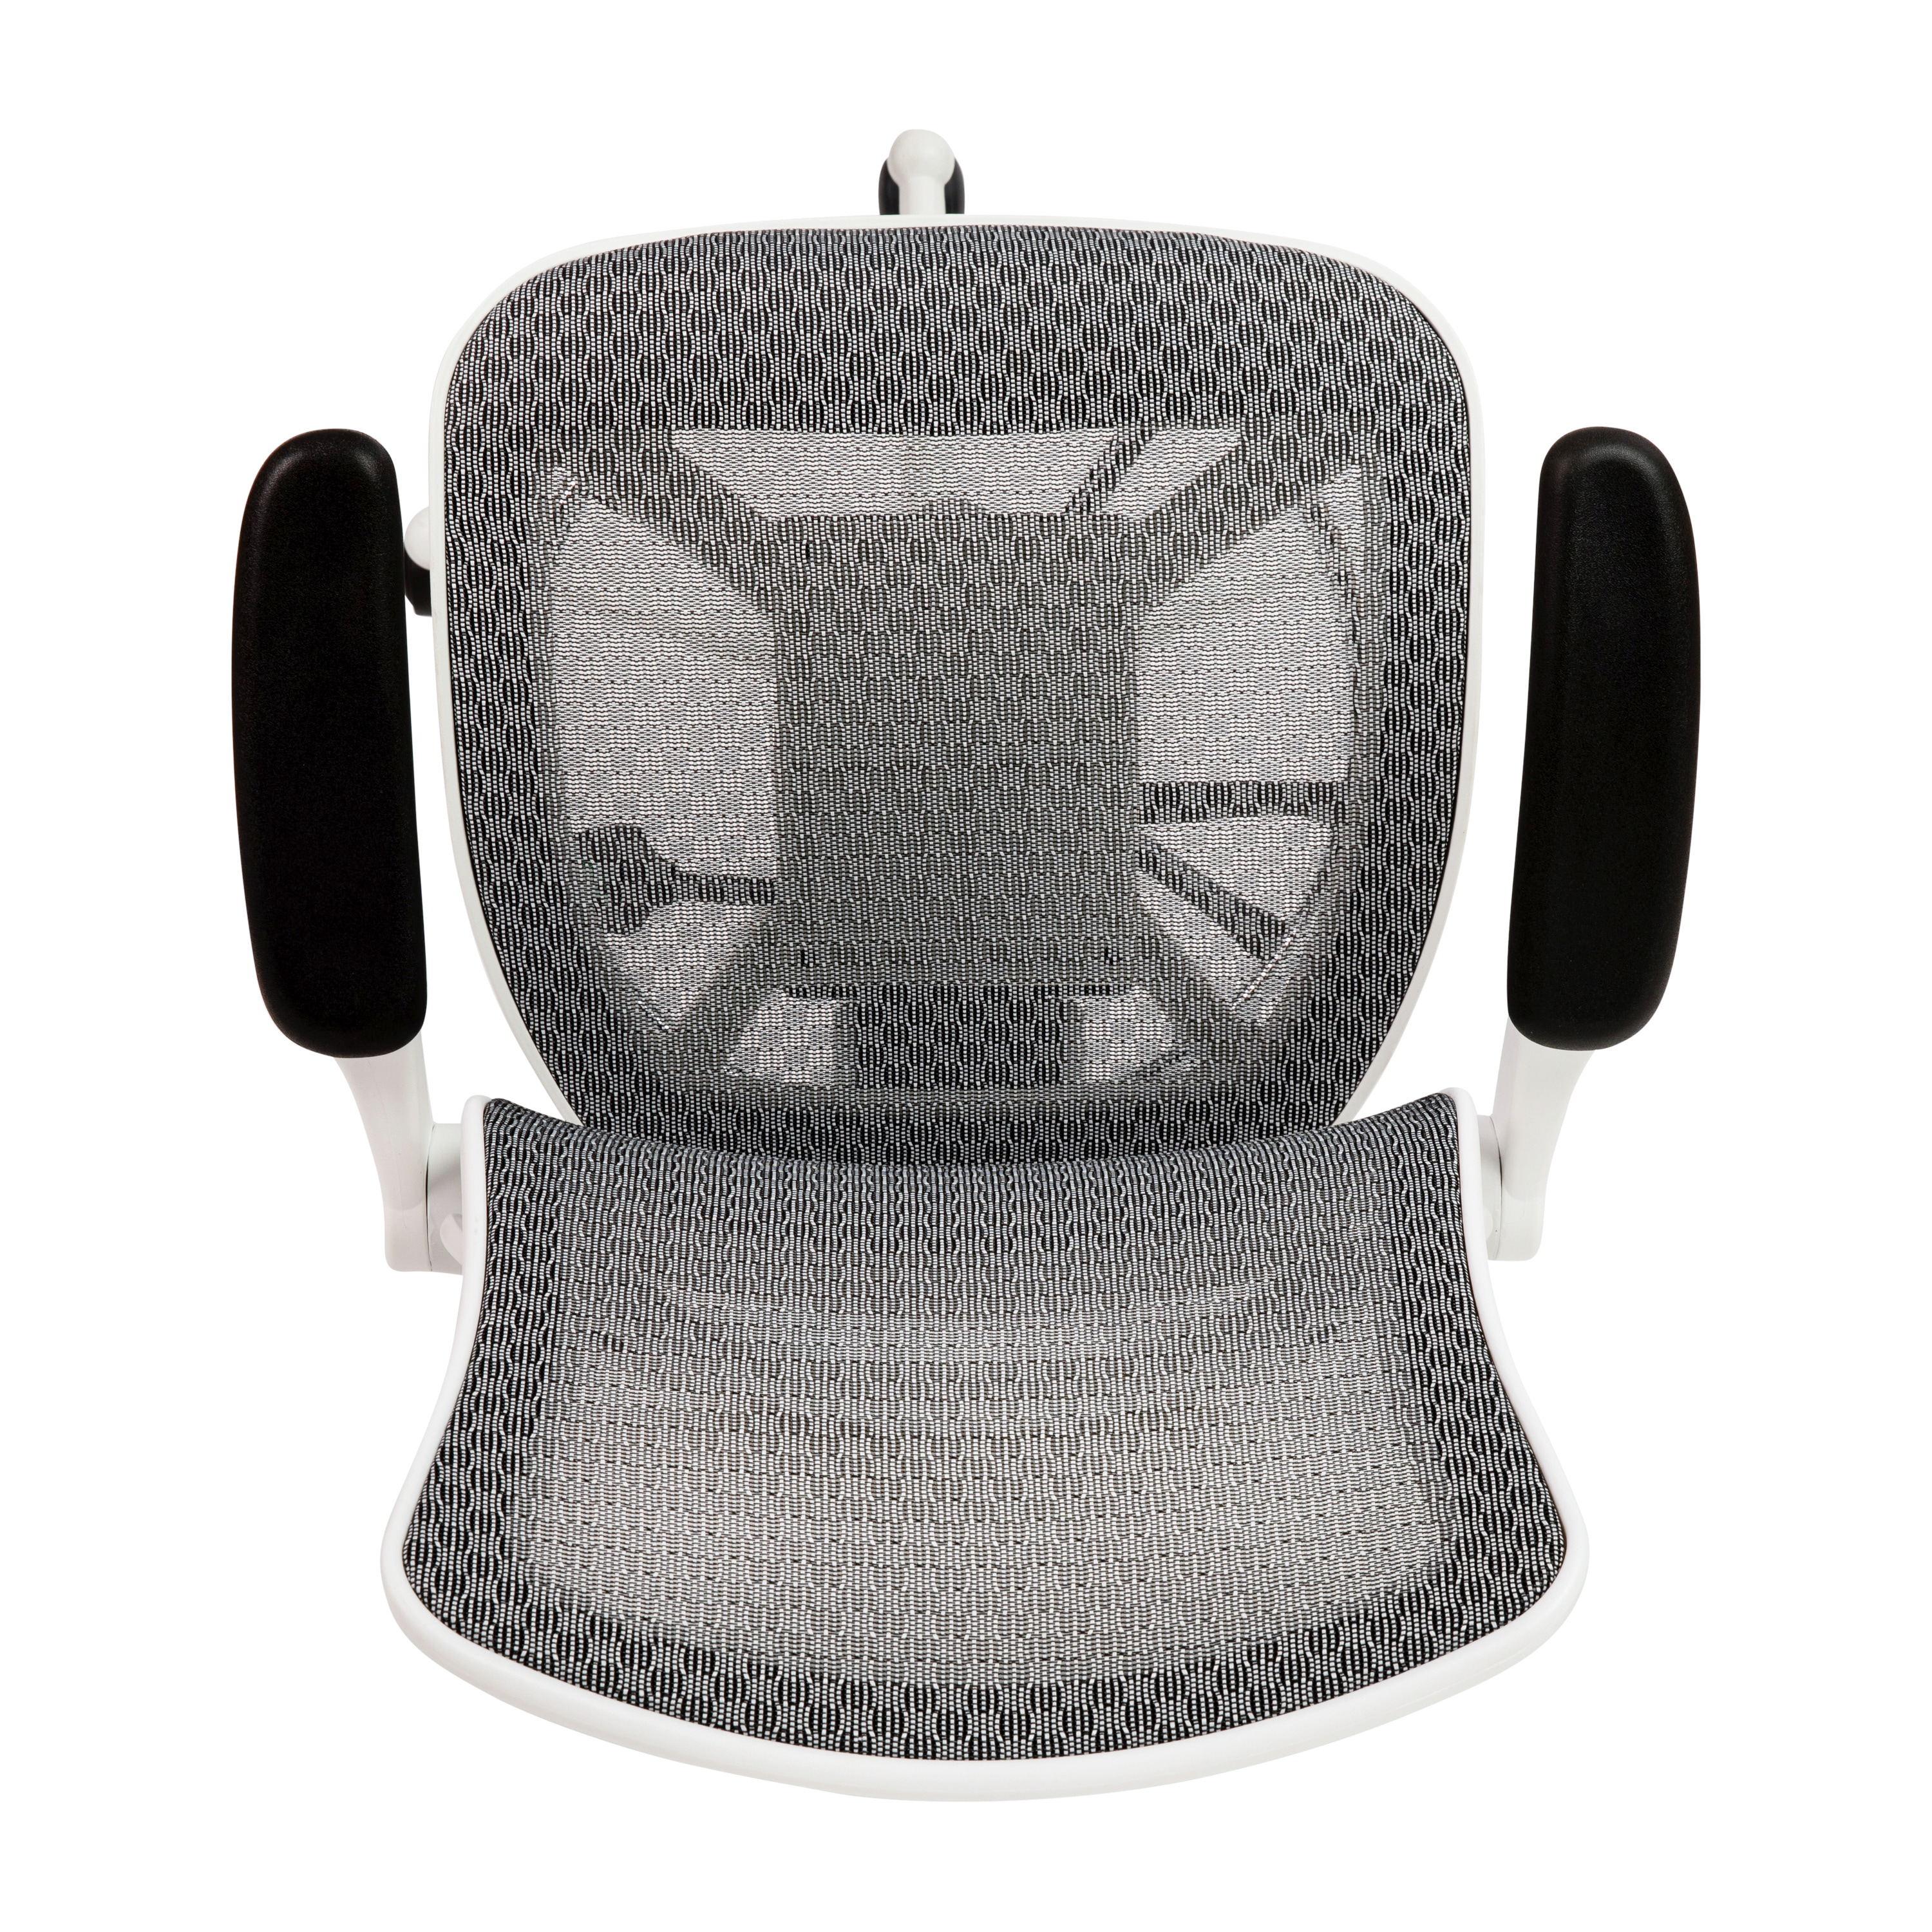 Oline ErgoPro Ergonomic Office Chair w/ Breathable Mesh Material, Navy Blue